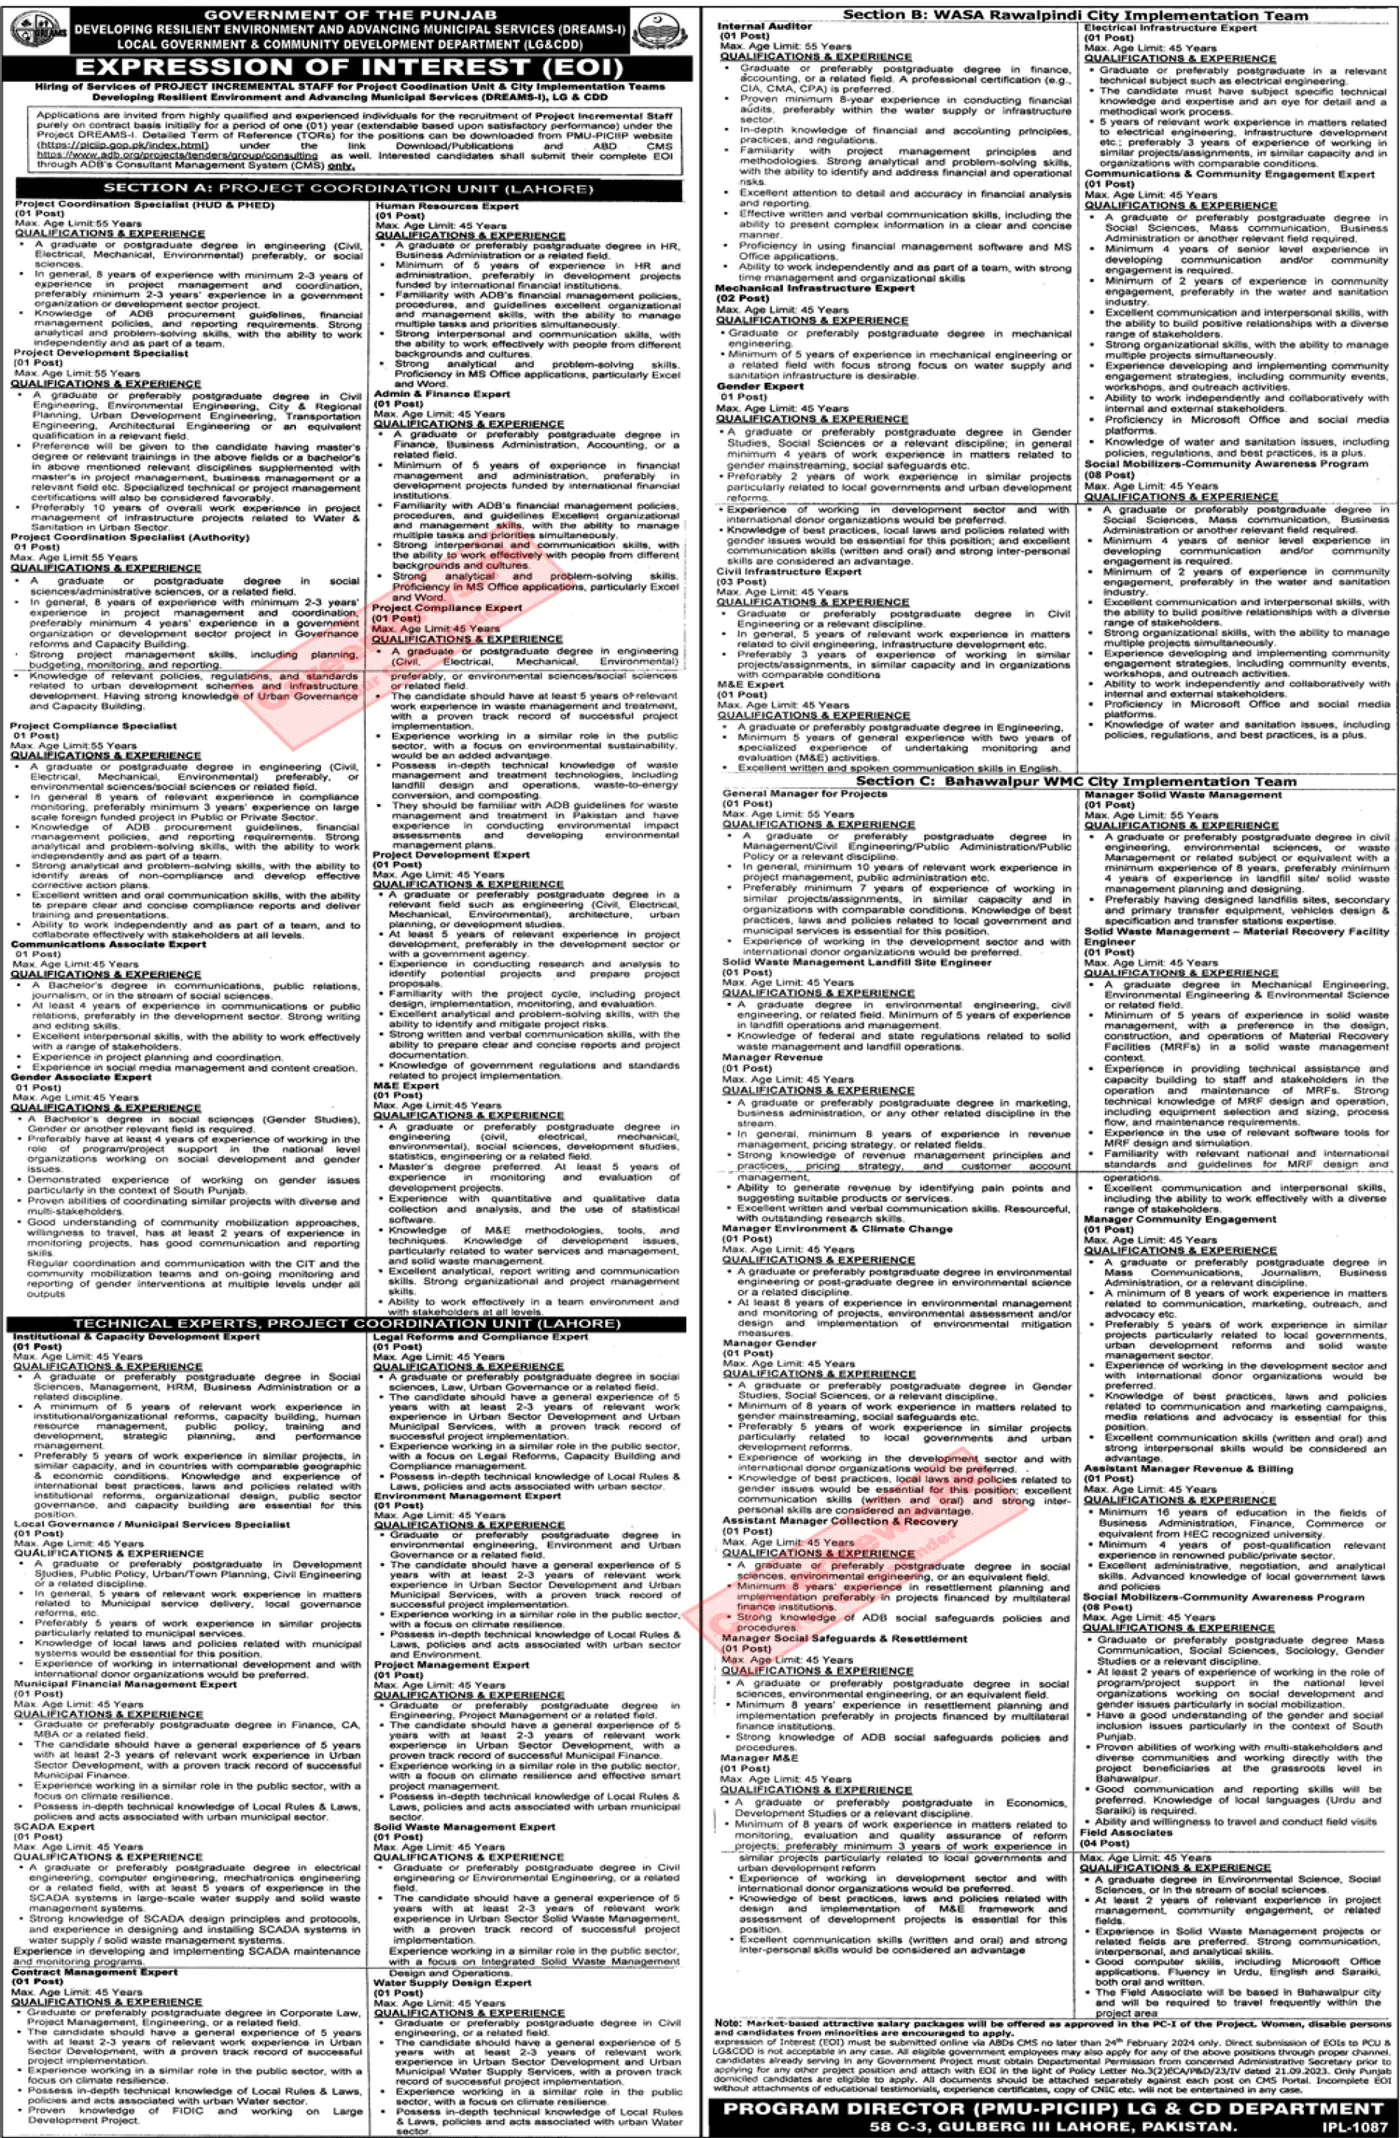 Local Government Punjab Jobs 2024